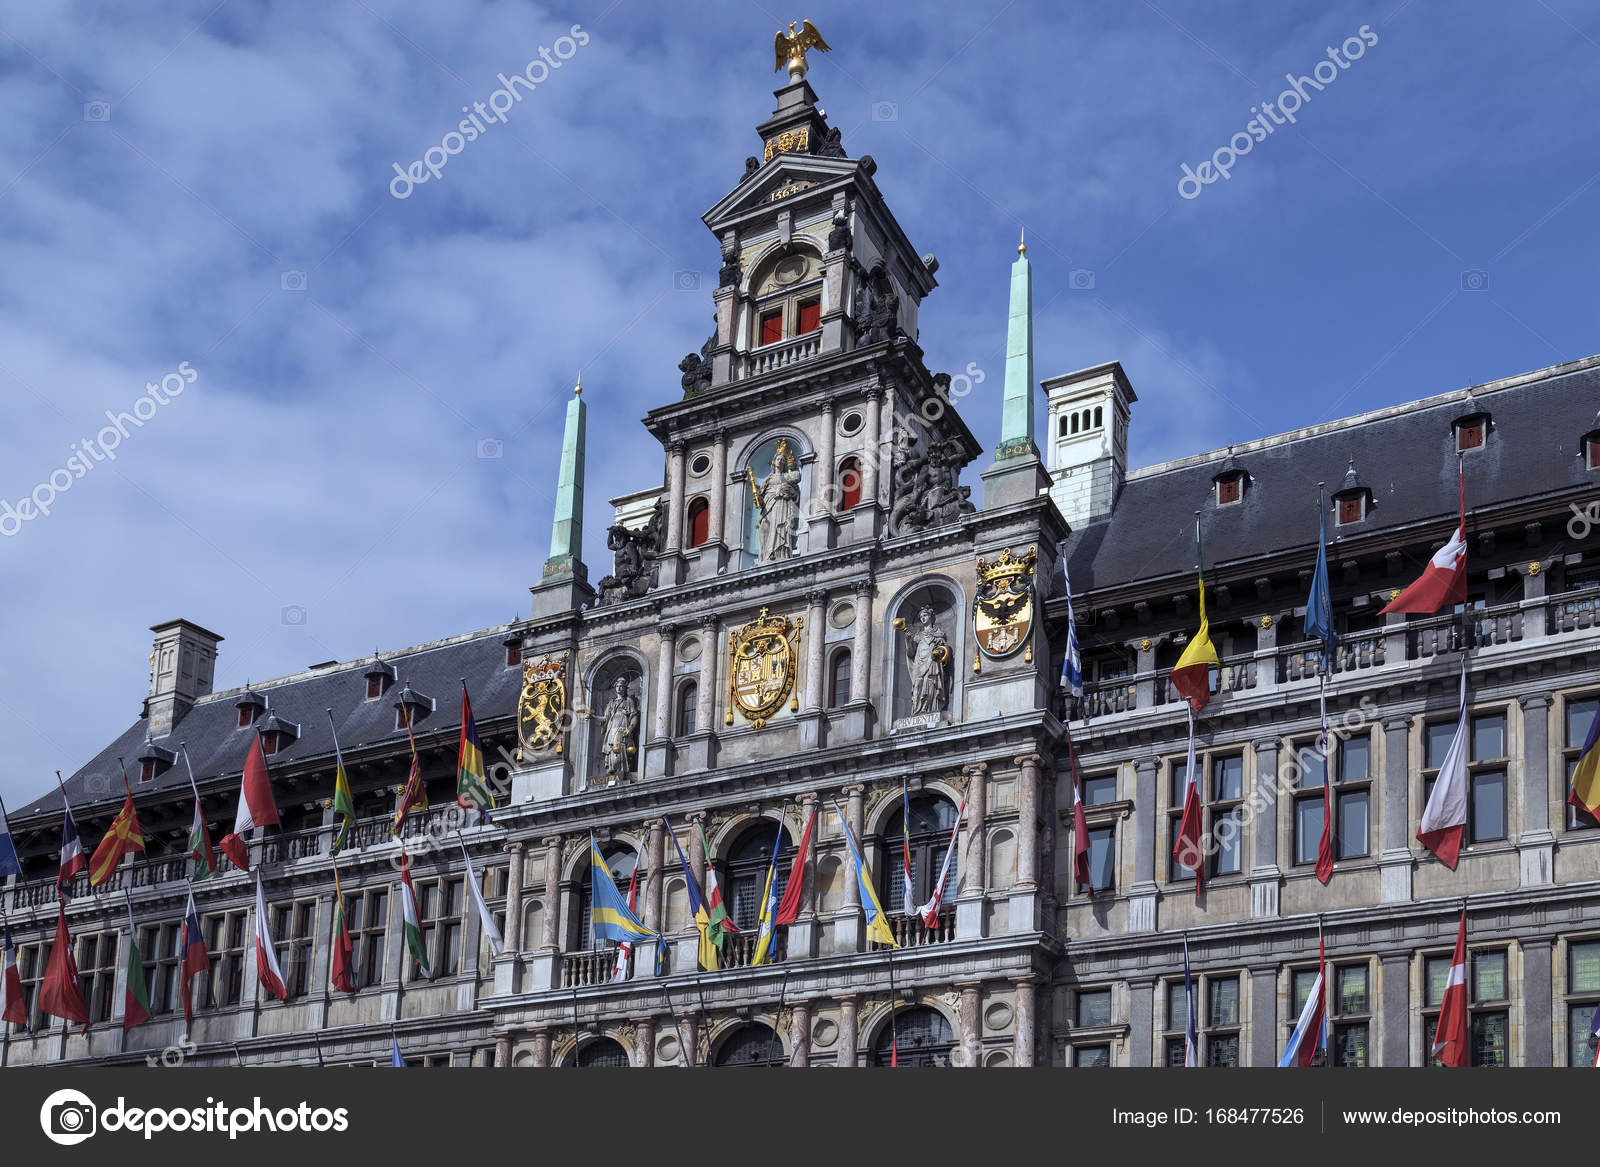 Das stadhuis - antwerp - belgium - Stockfotografie ...